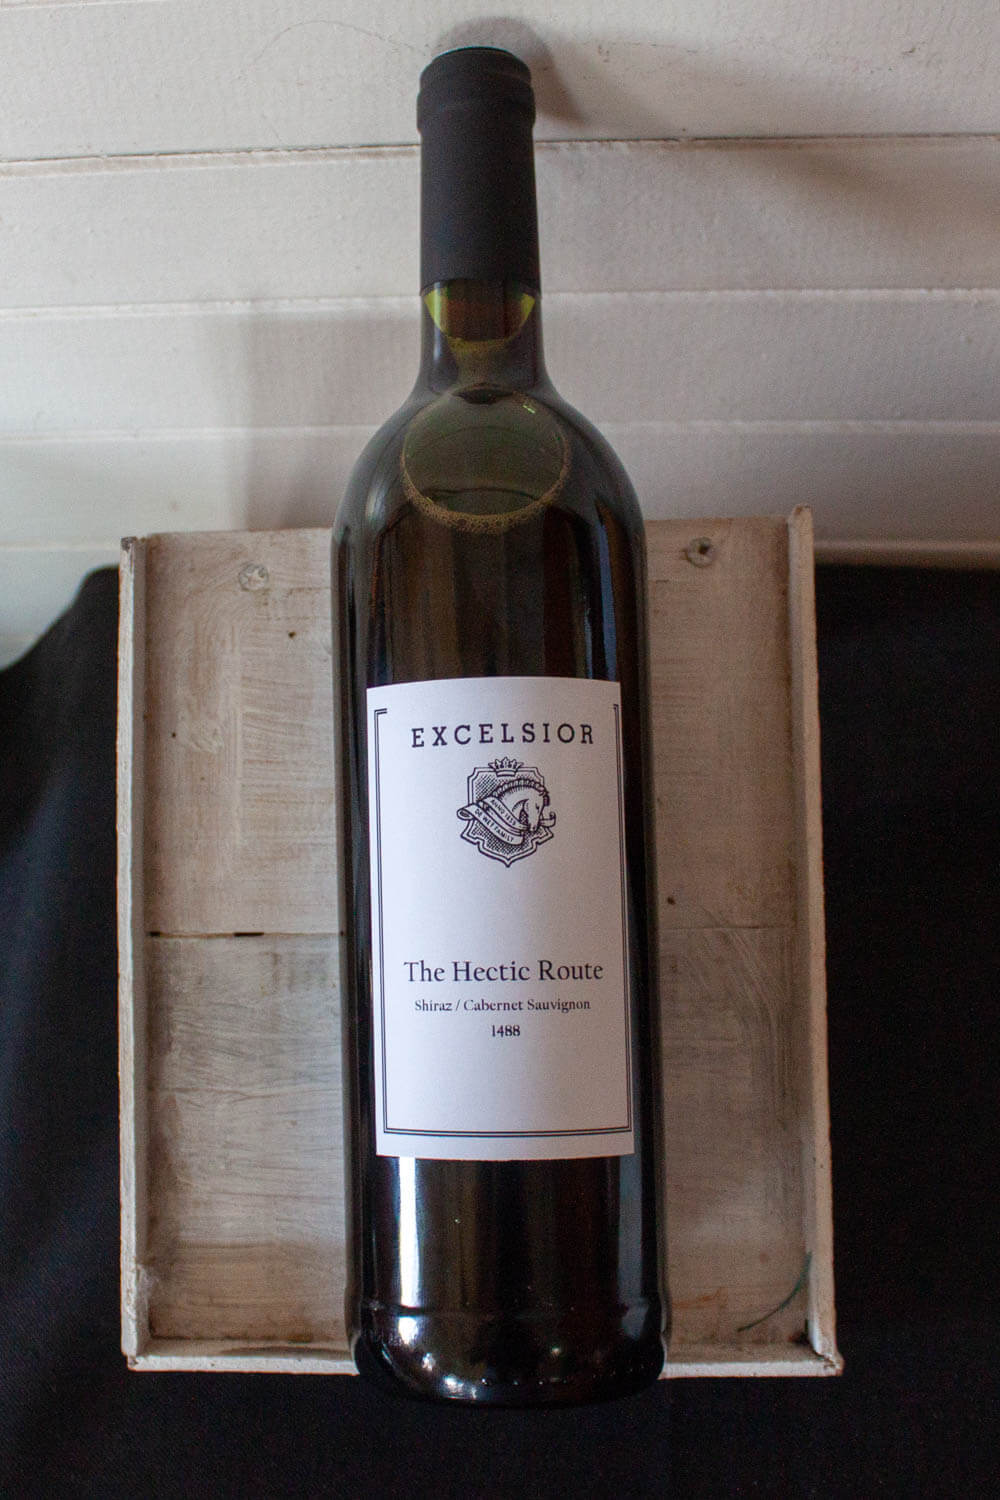 Bottle of wine we blended at Excelsior winery.